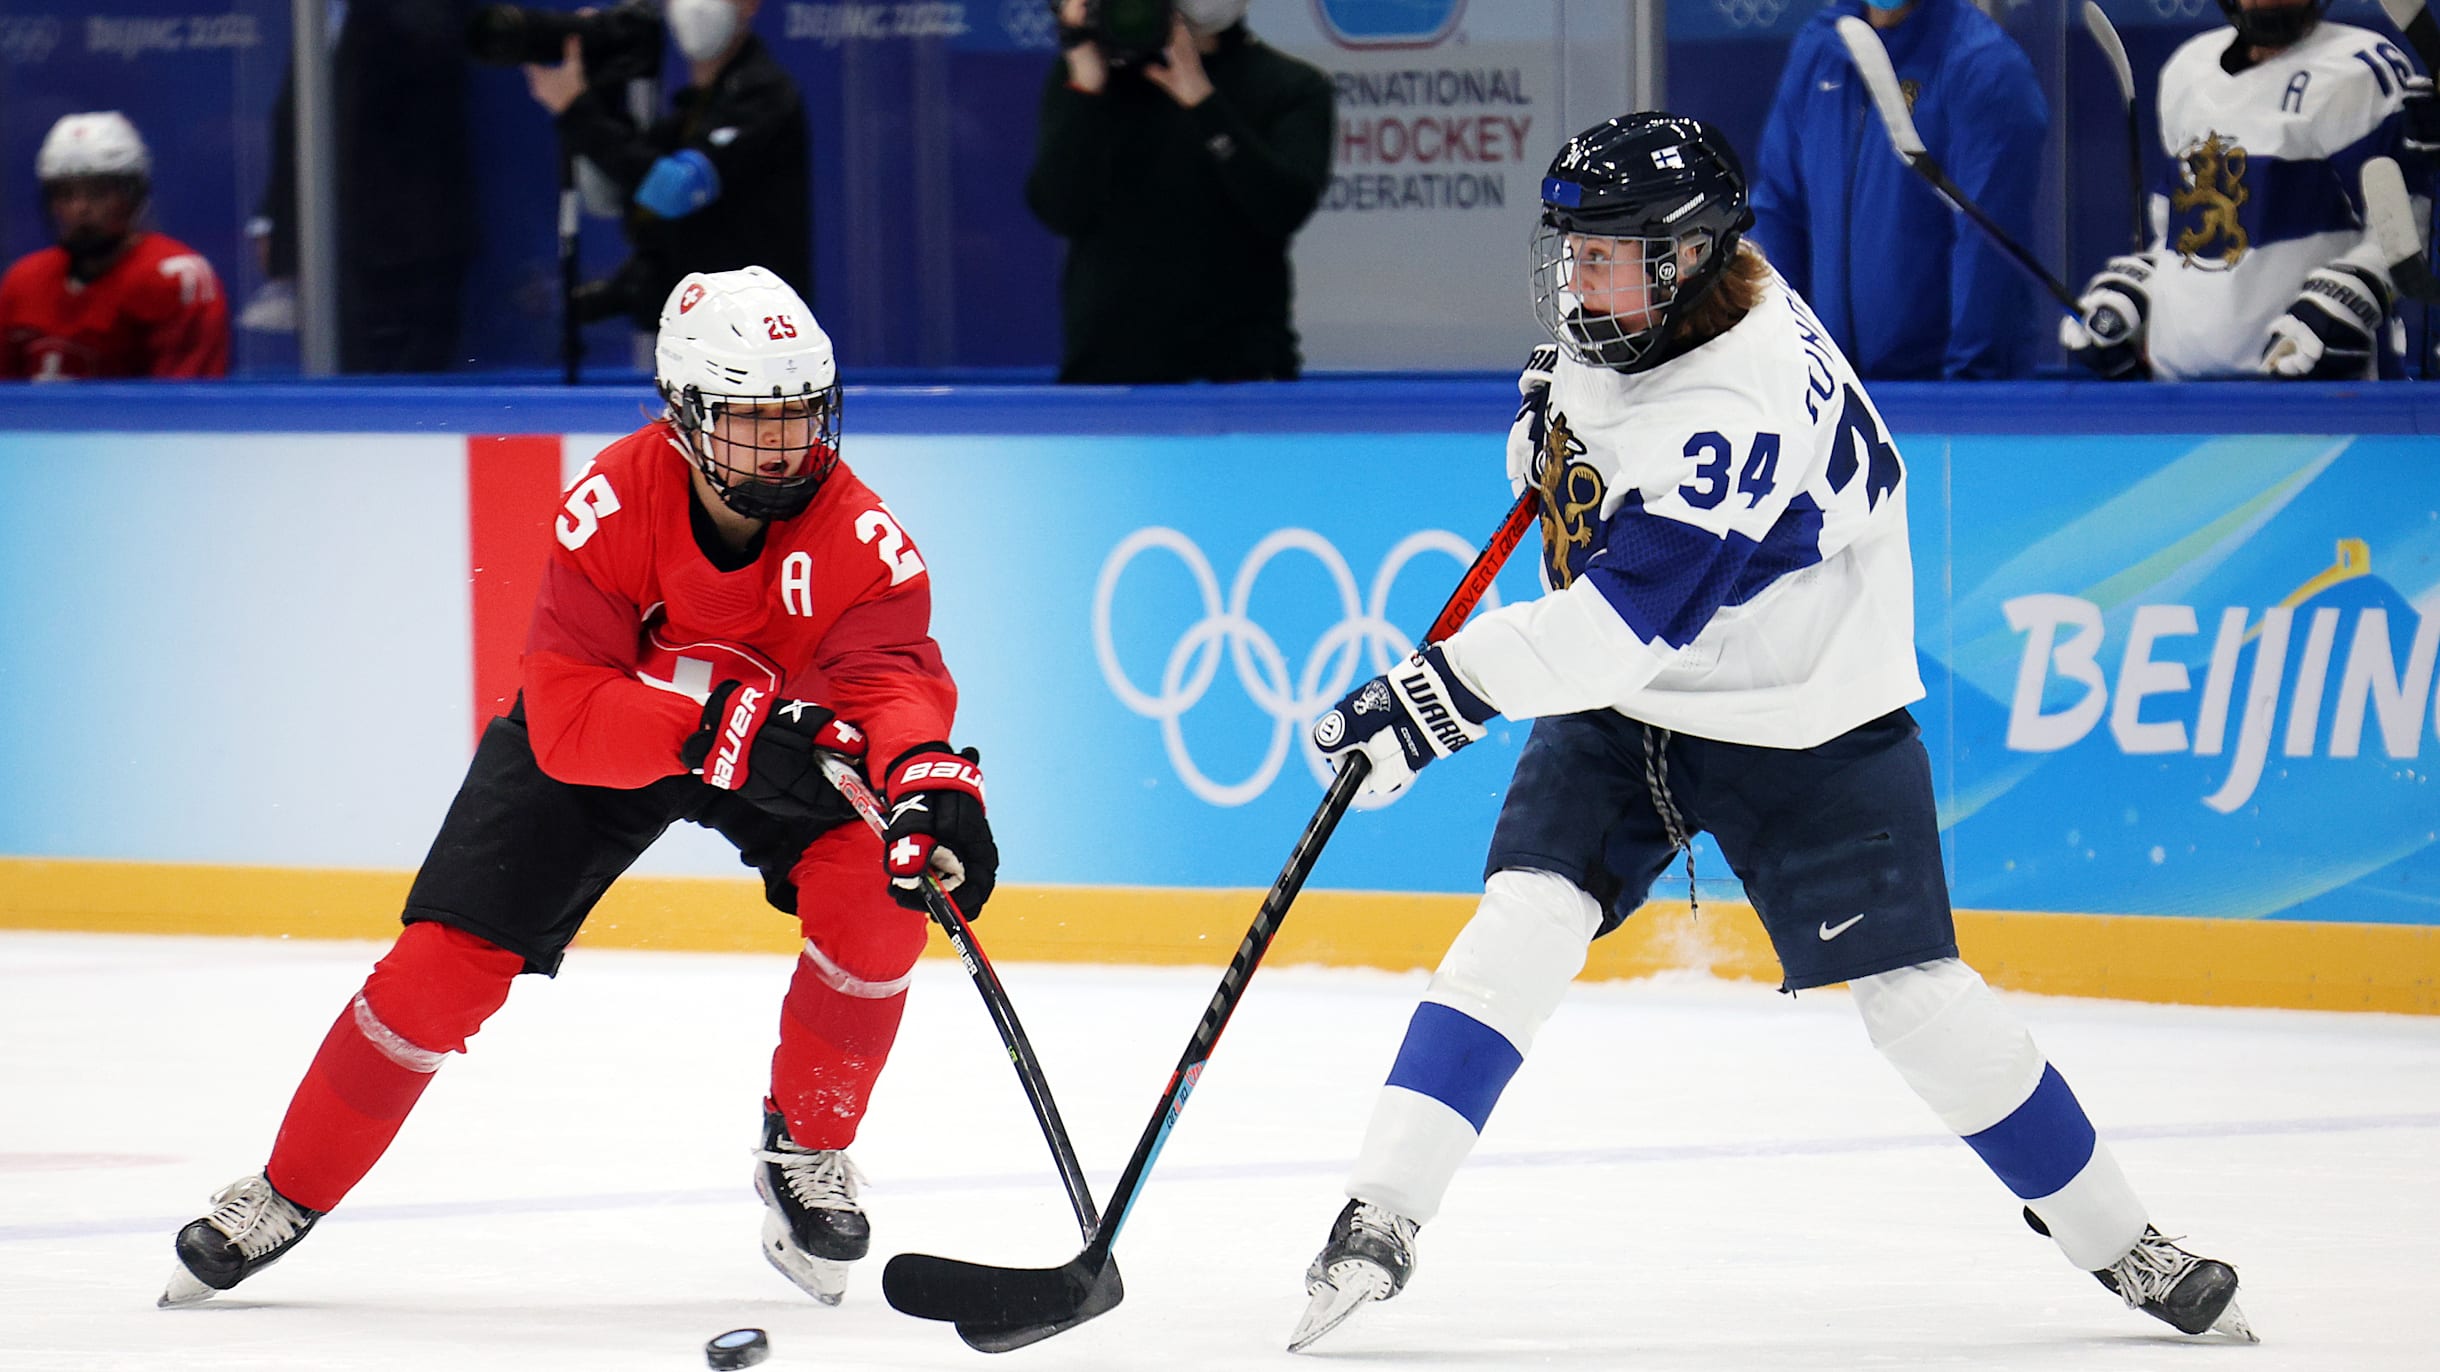 Switzerland looking to upset bronze bombers Finland in womens ice hockey third-place playoff